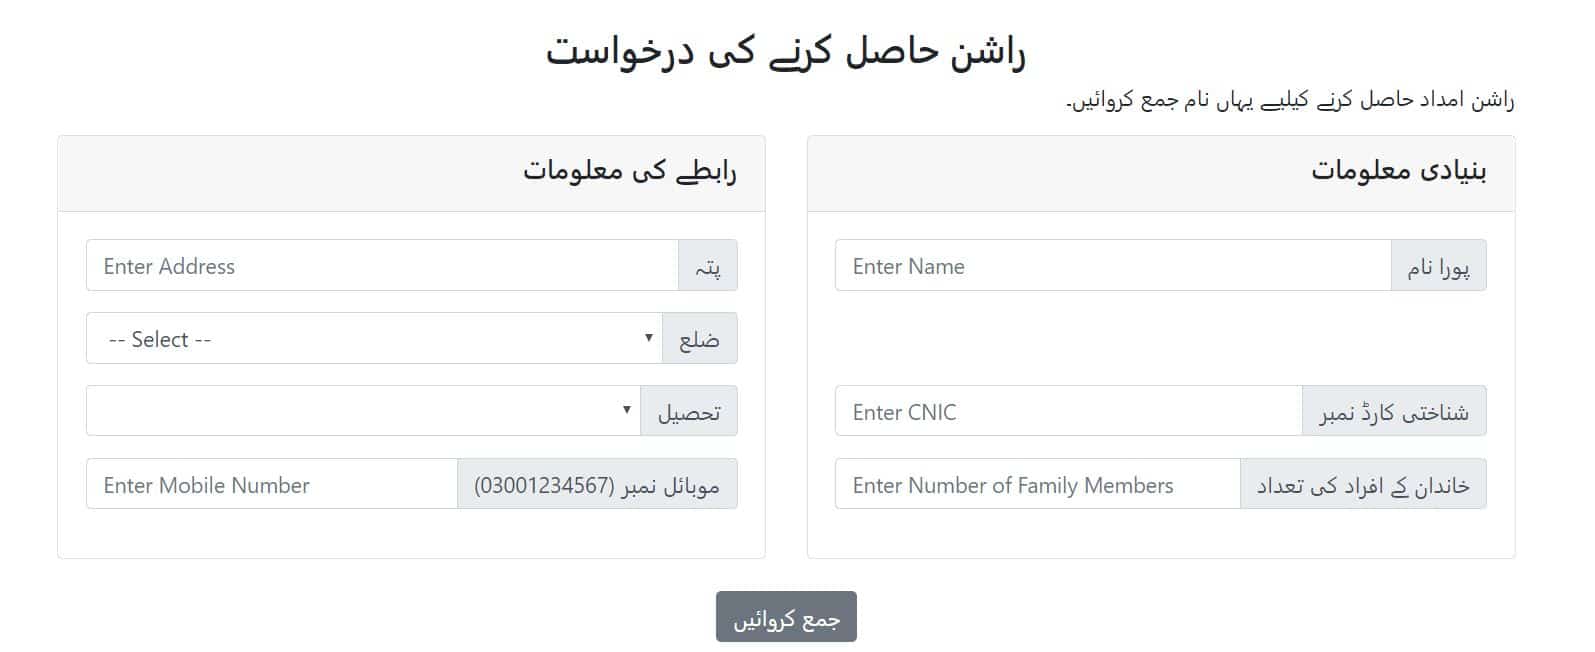 Ehsaas Rashan Program Online Registration